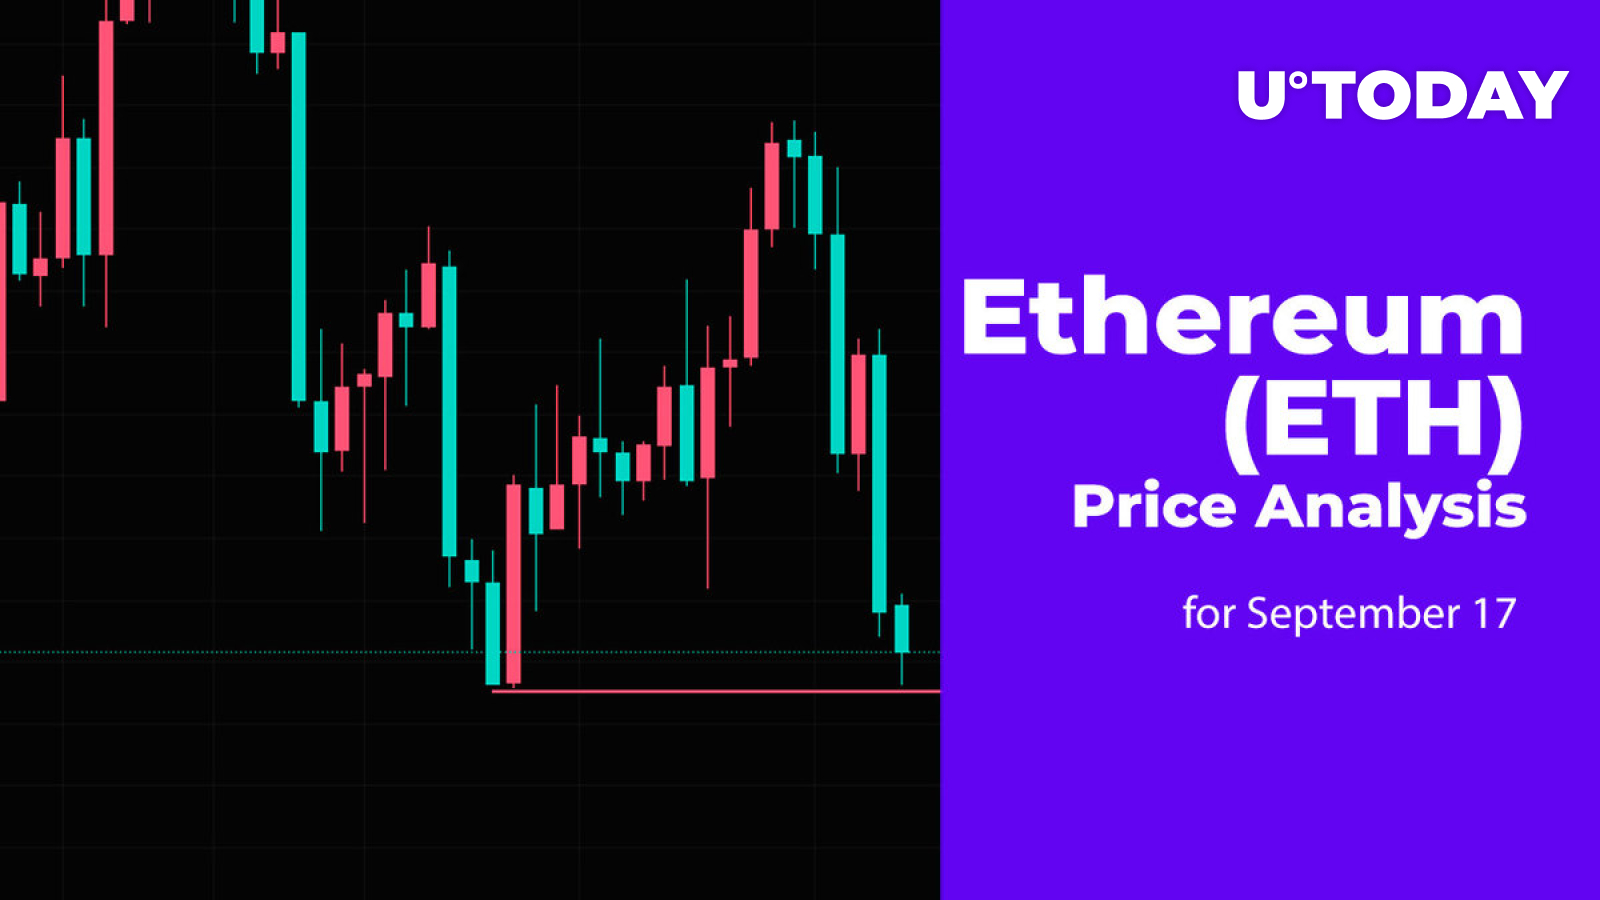 Ethereum (ETH) Price Analysis for September 17